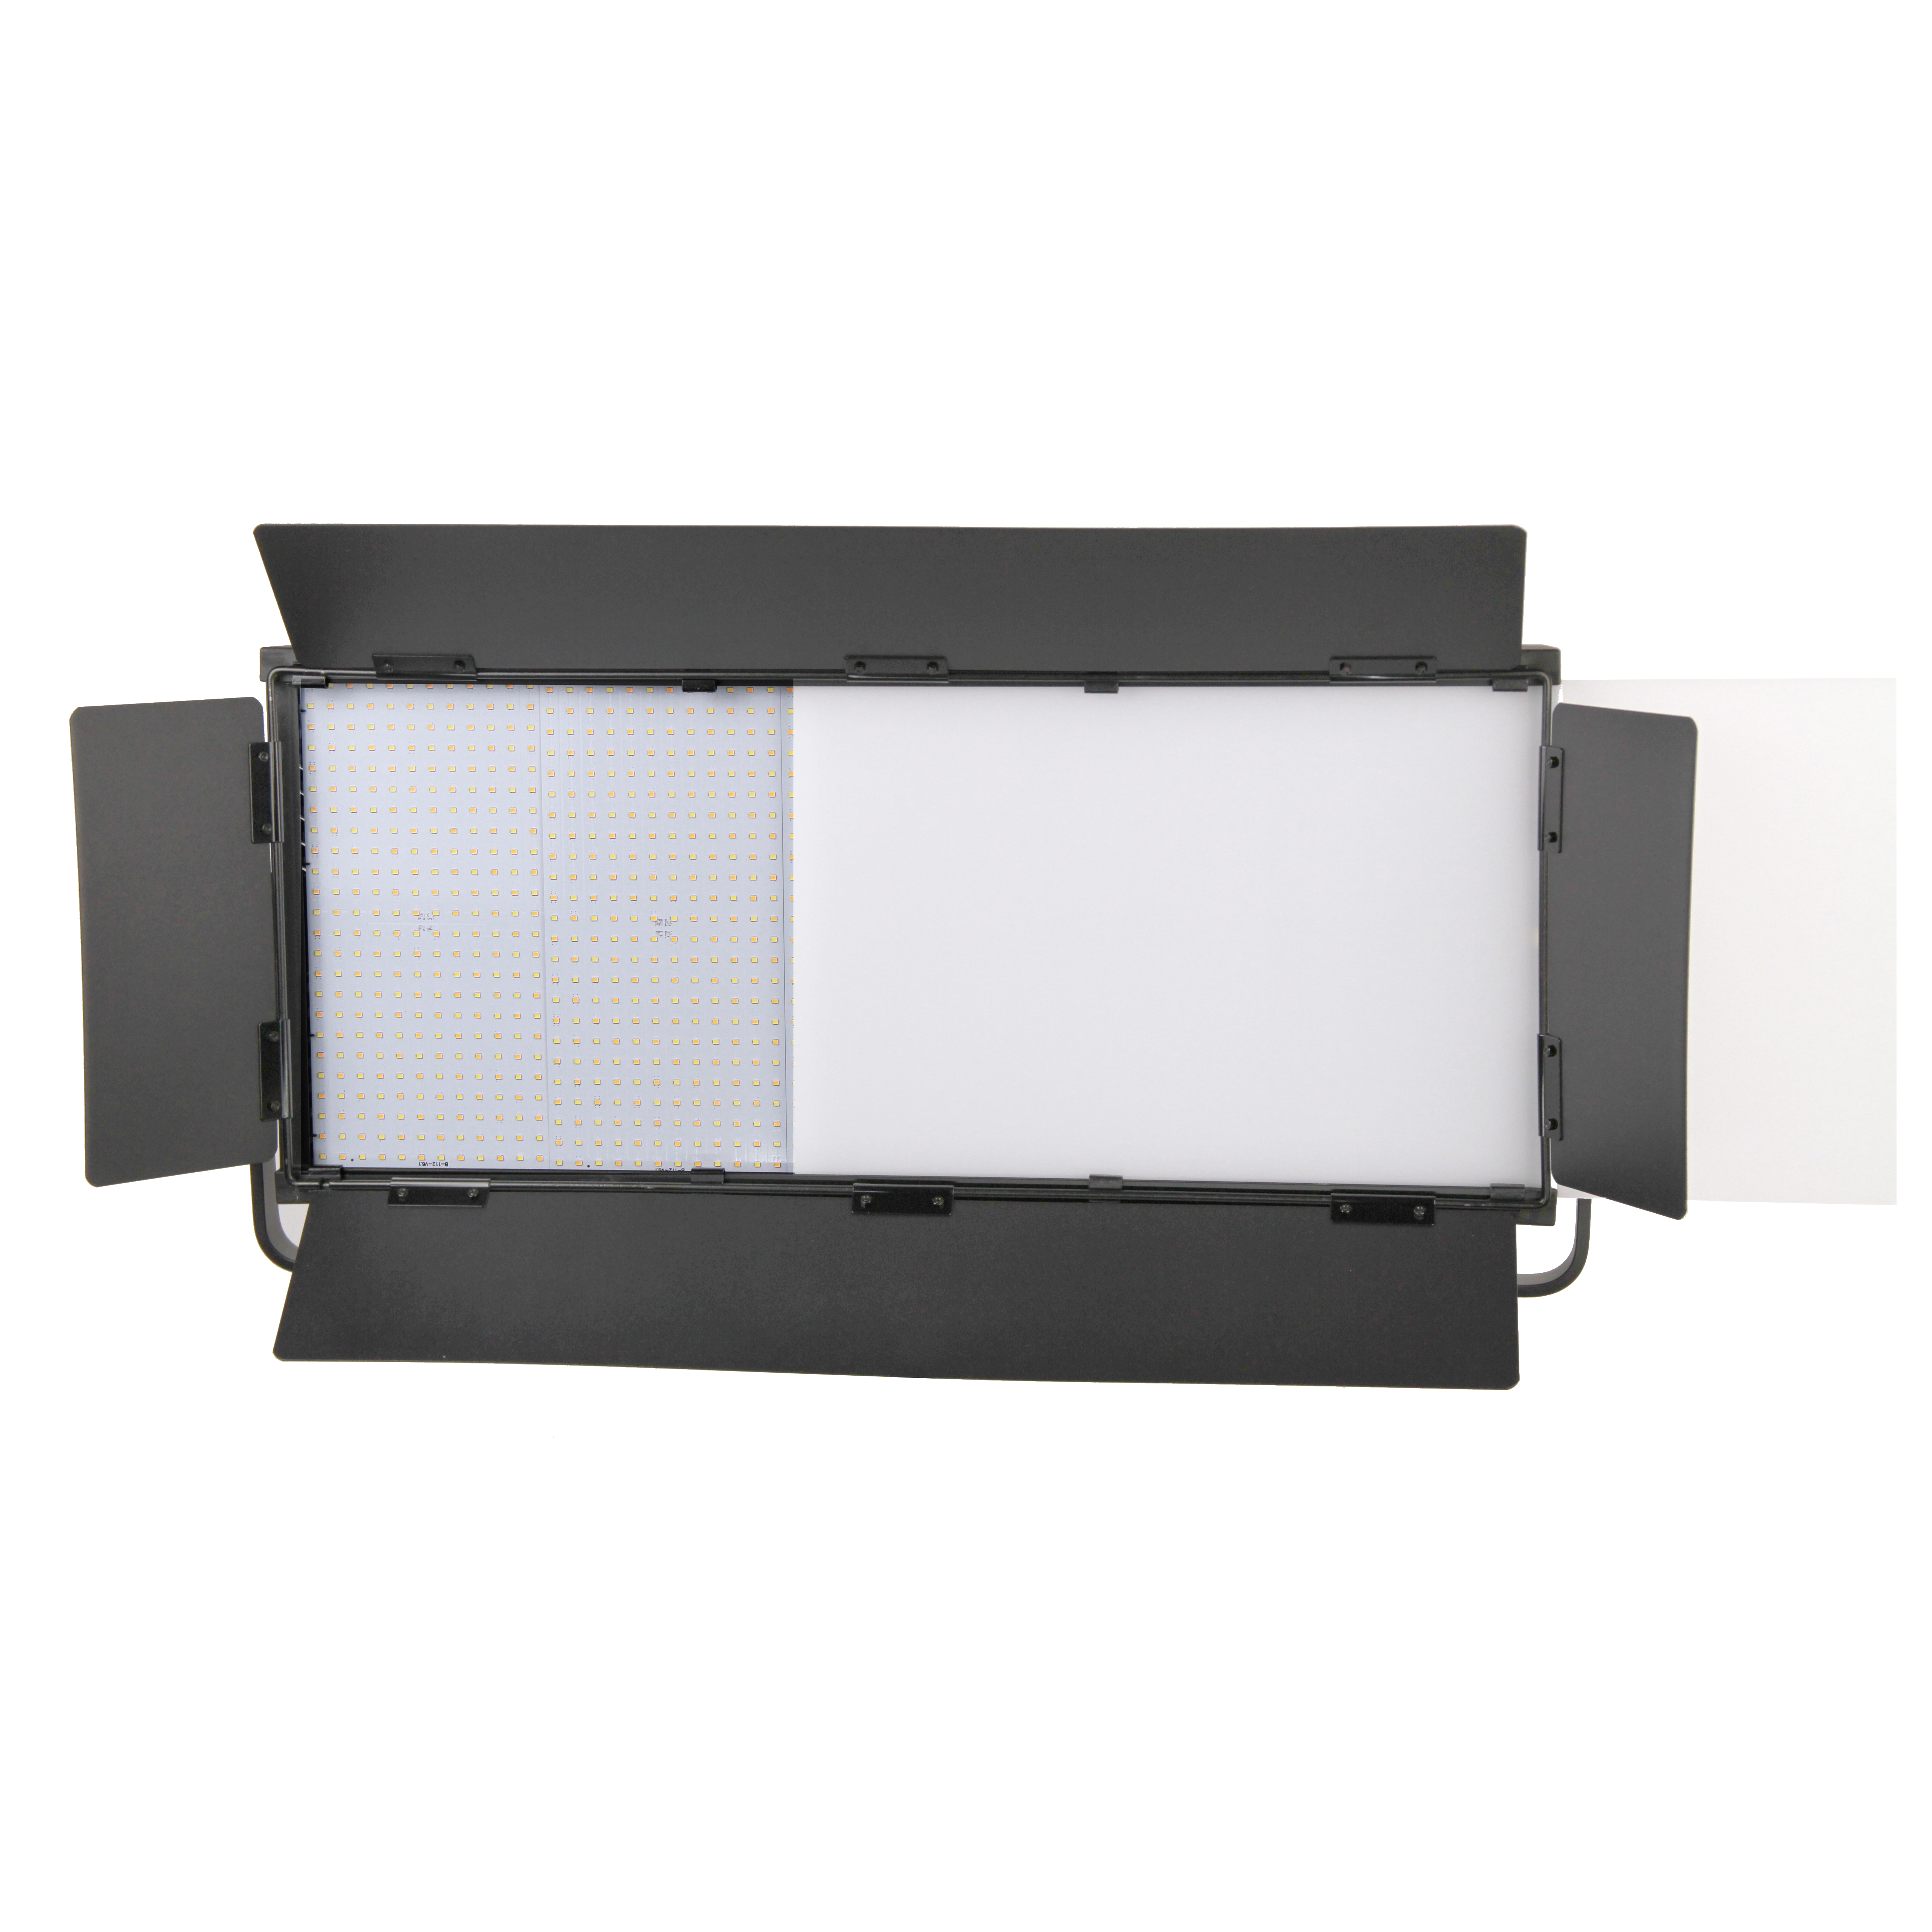    GreenBean DayLight III 200 LED Bi-color   Ultra-mart